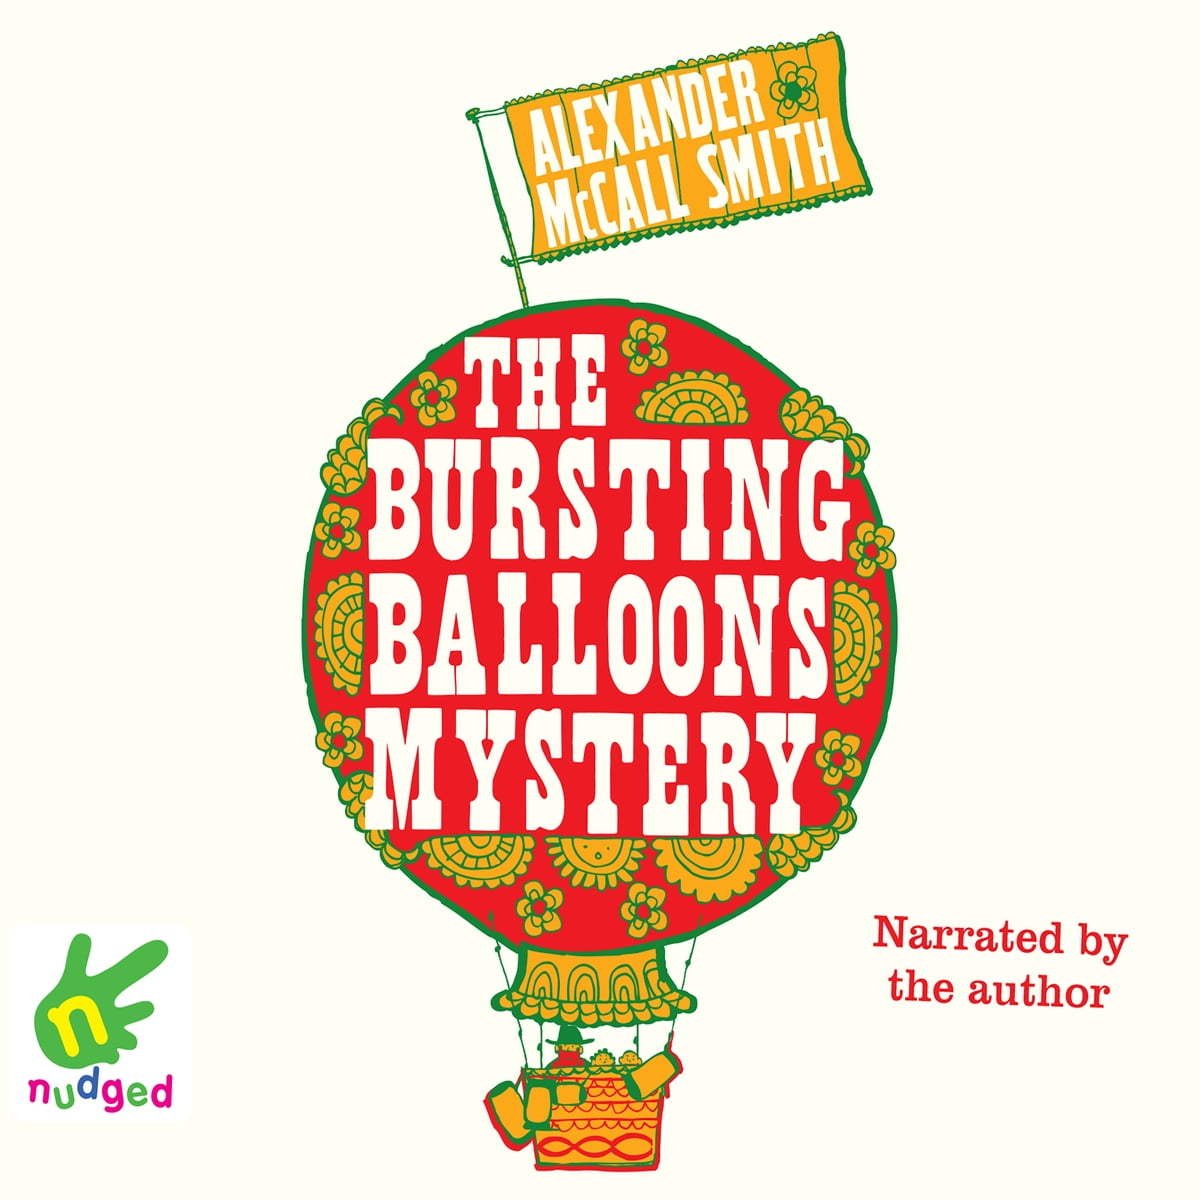 McCall Smith, Alexander Bursting Balloons Mystery 